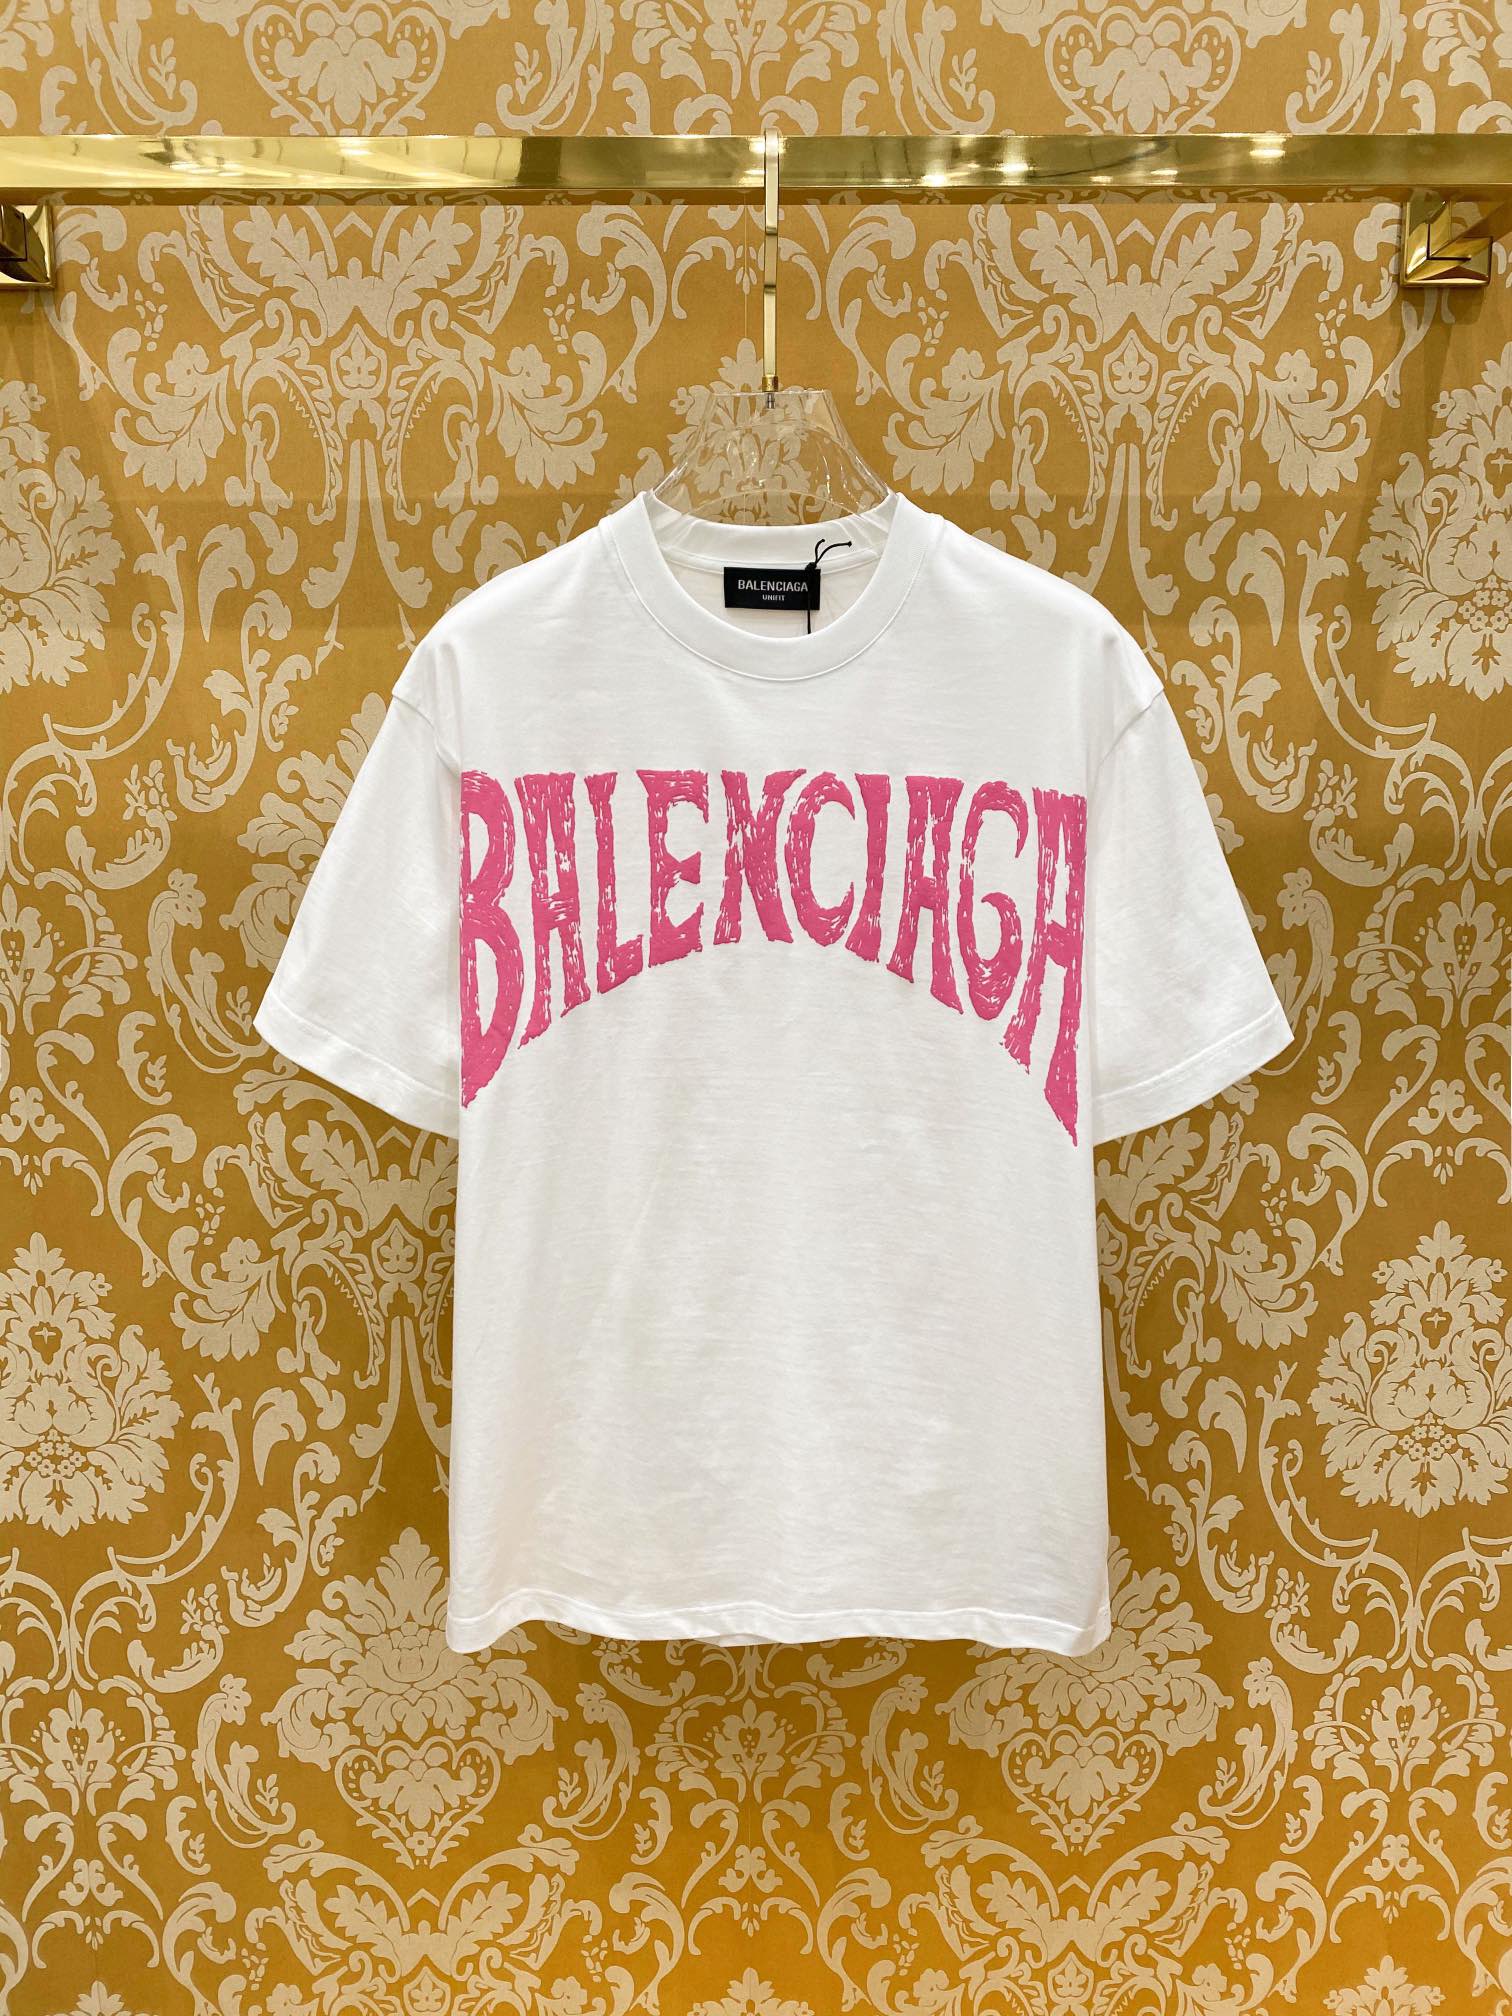 Balenciaga Clothing T-Shirt Cotton Mercerized Spring/Summer Collection Fashion Short Sleeve